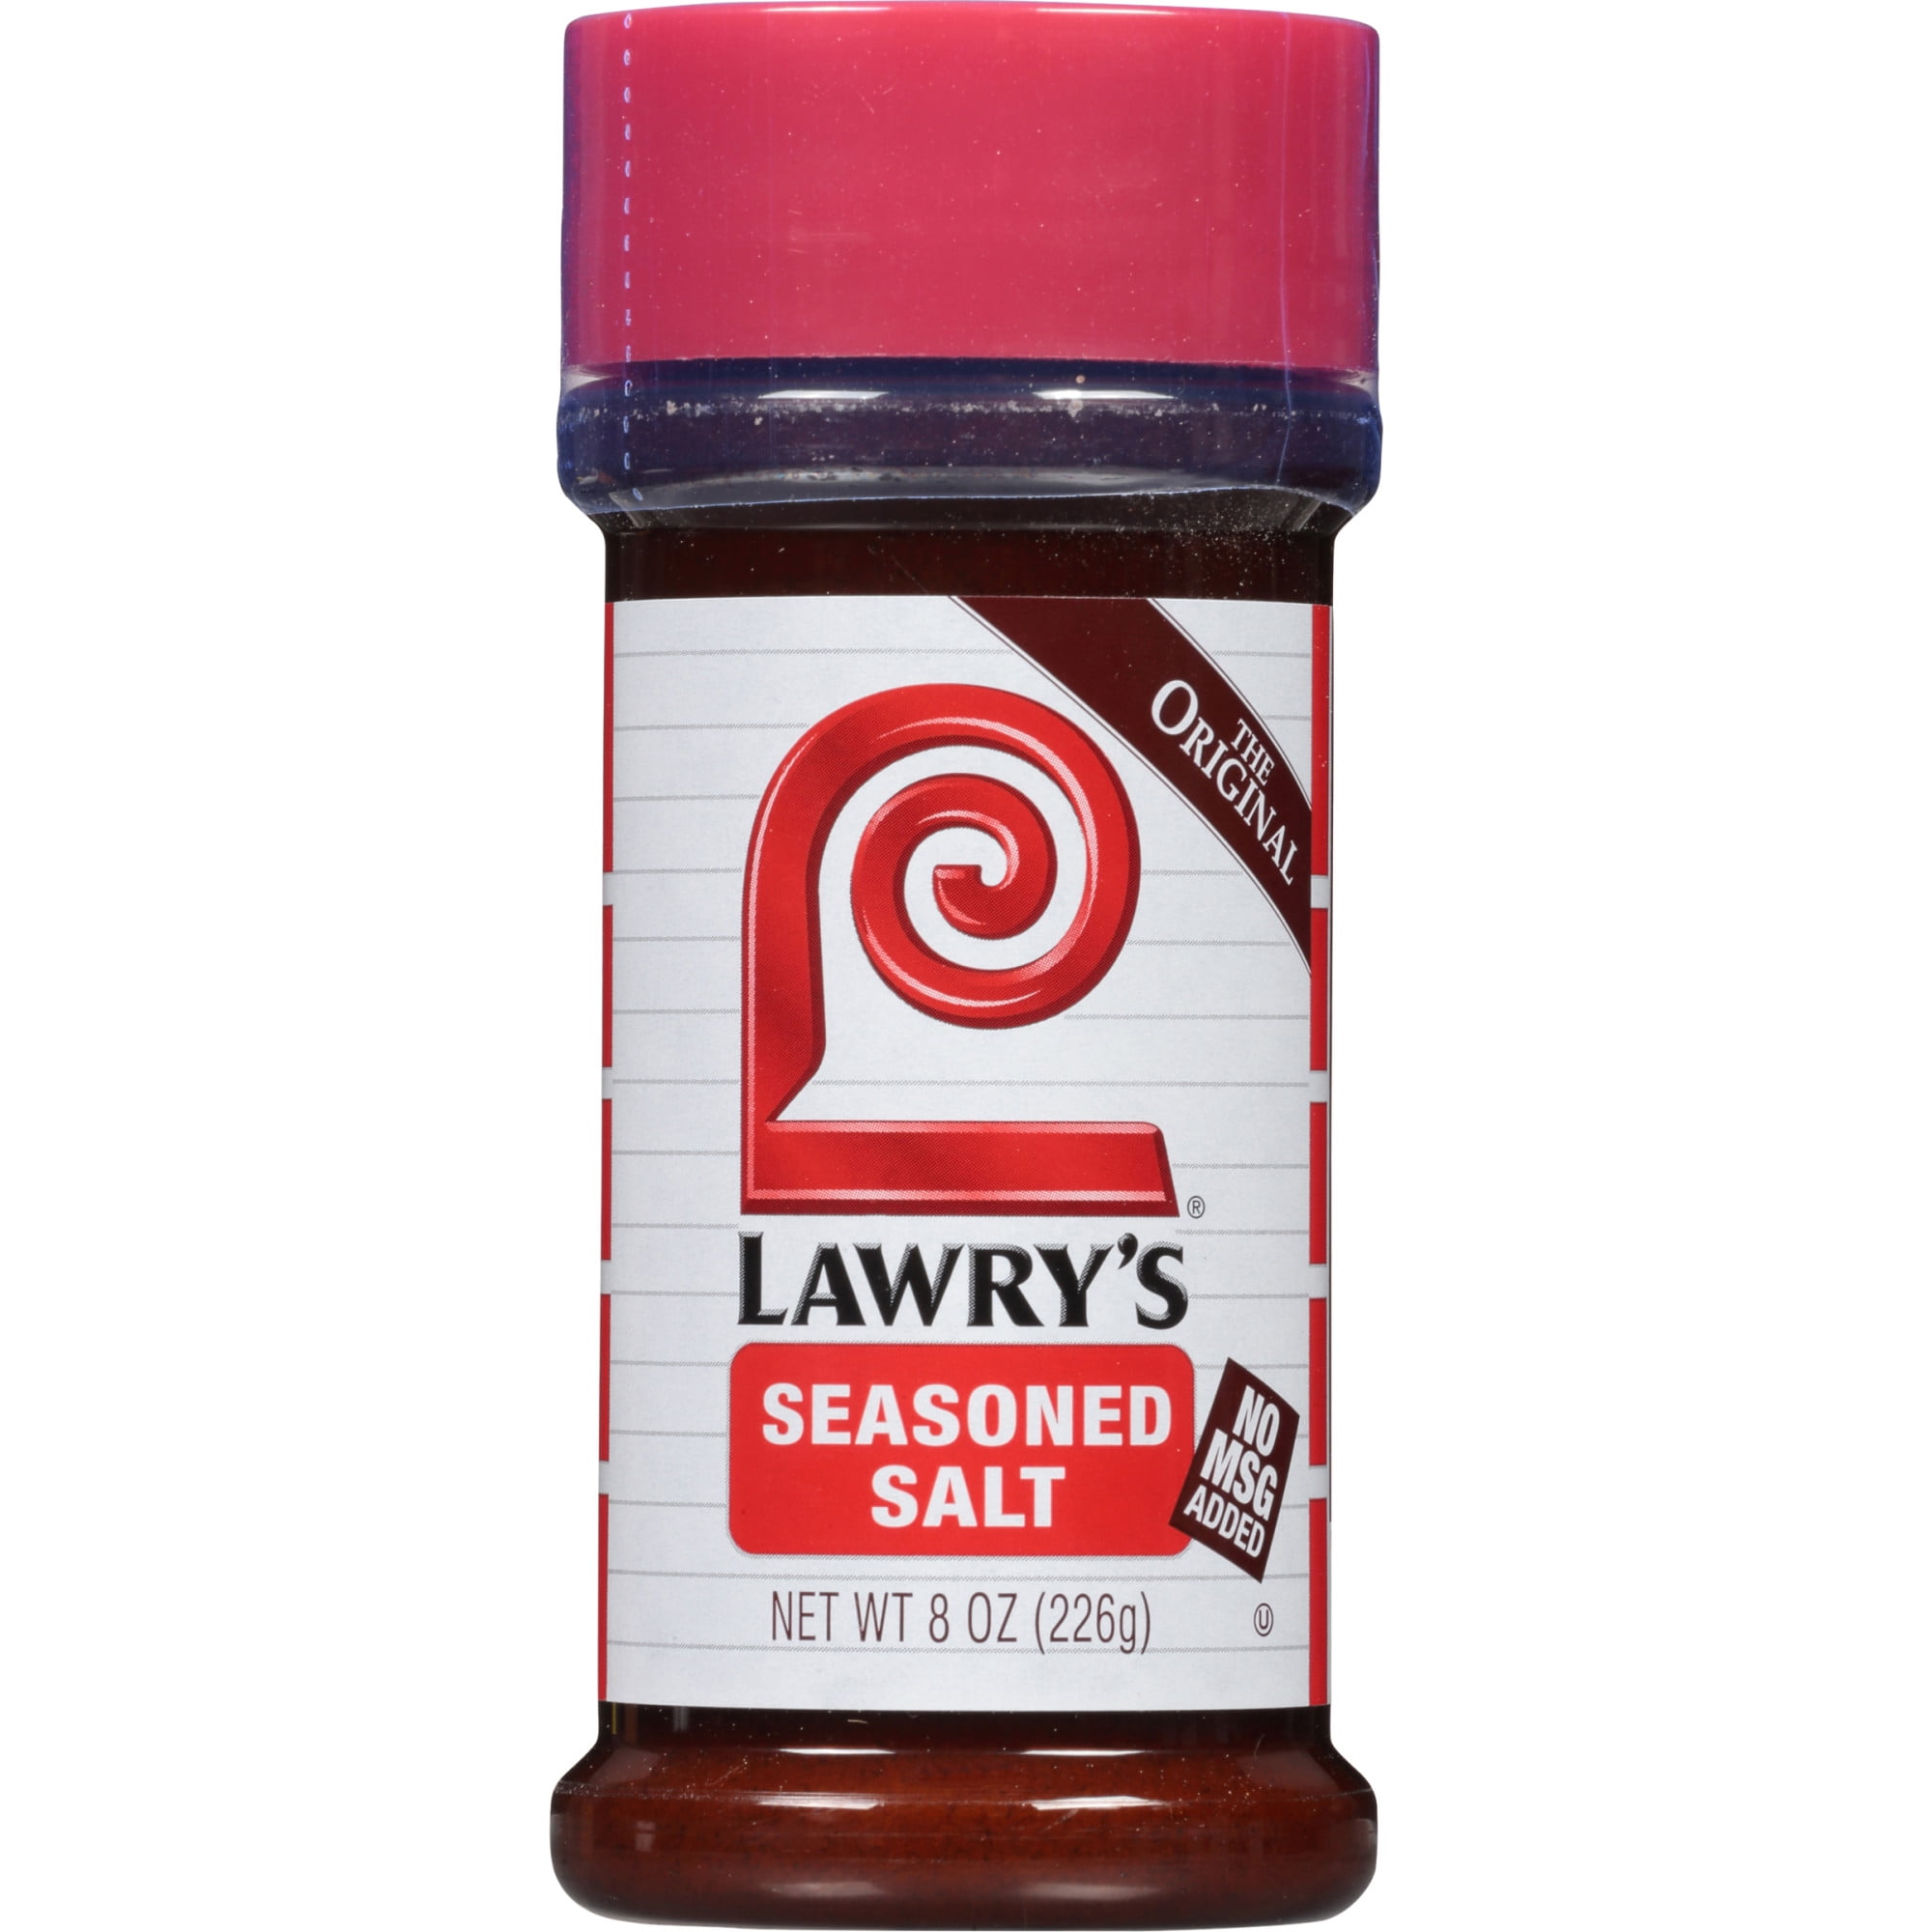 5.8 oz. Low Salt Mix – Now It's Done Seasonings